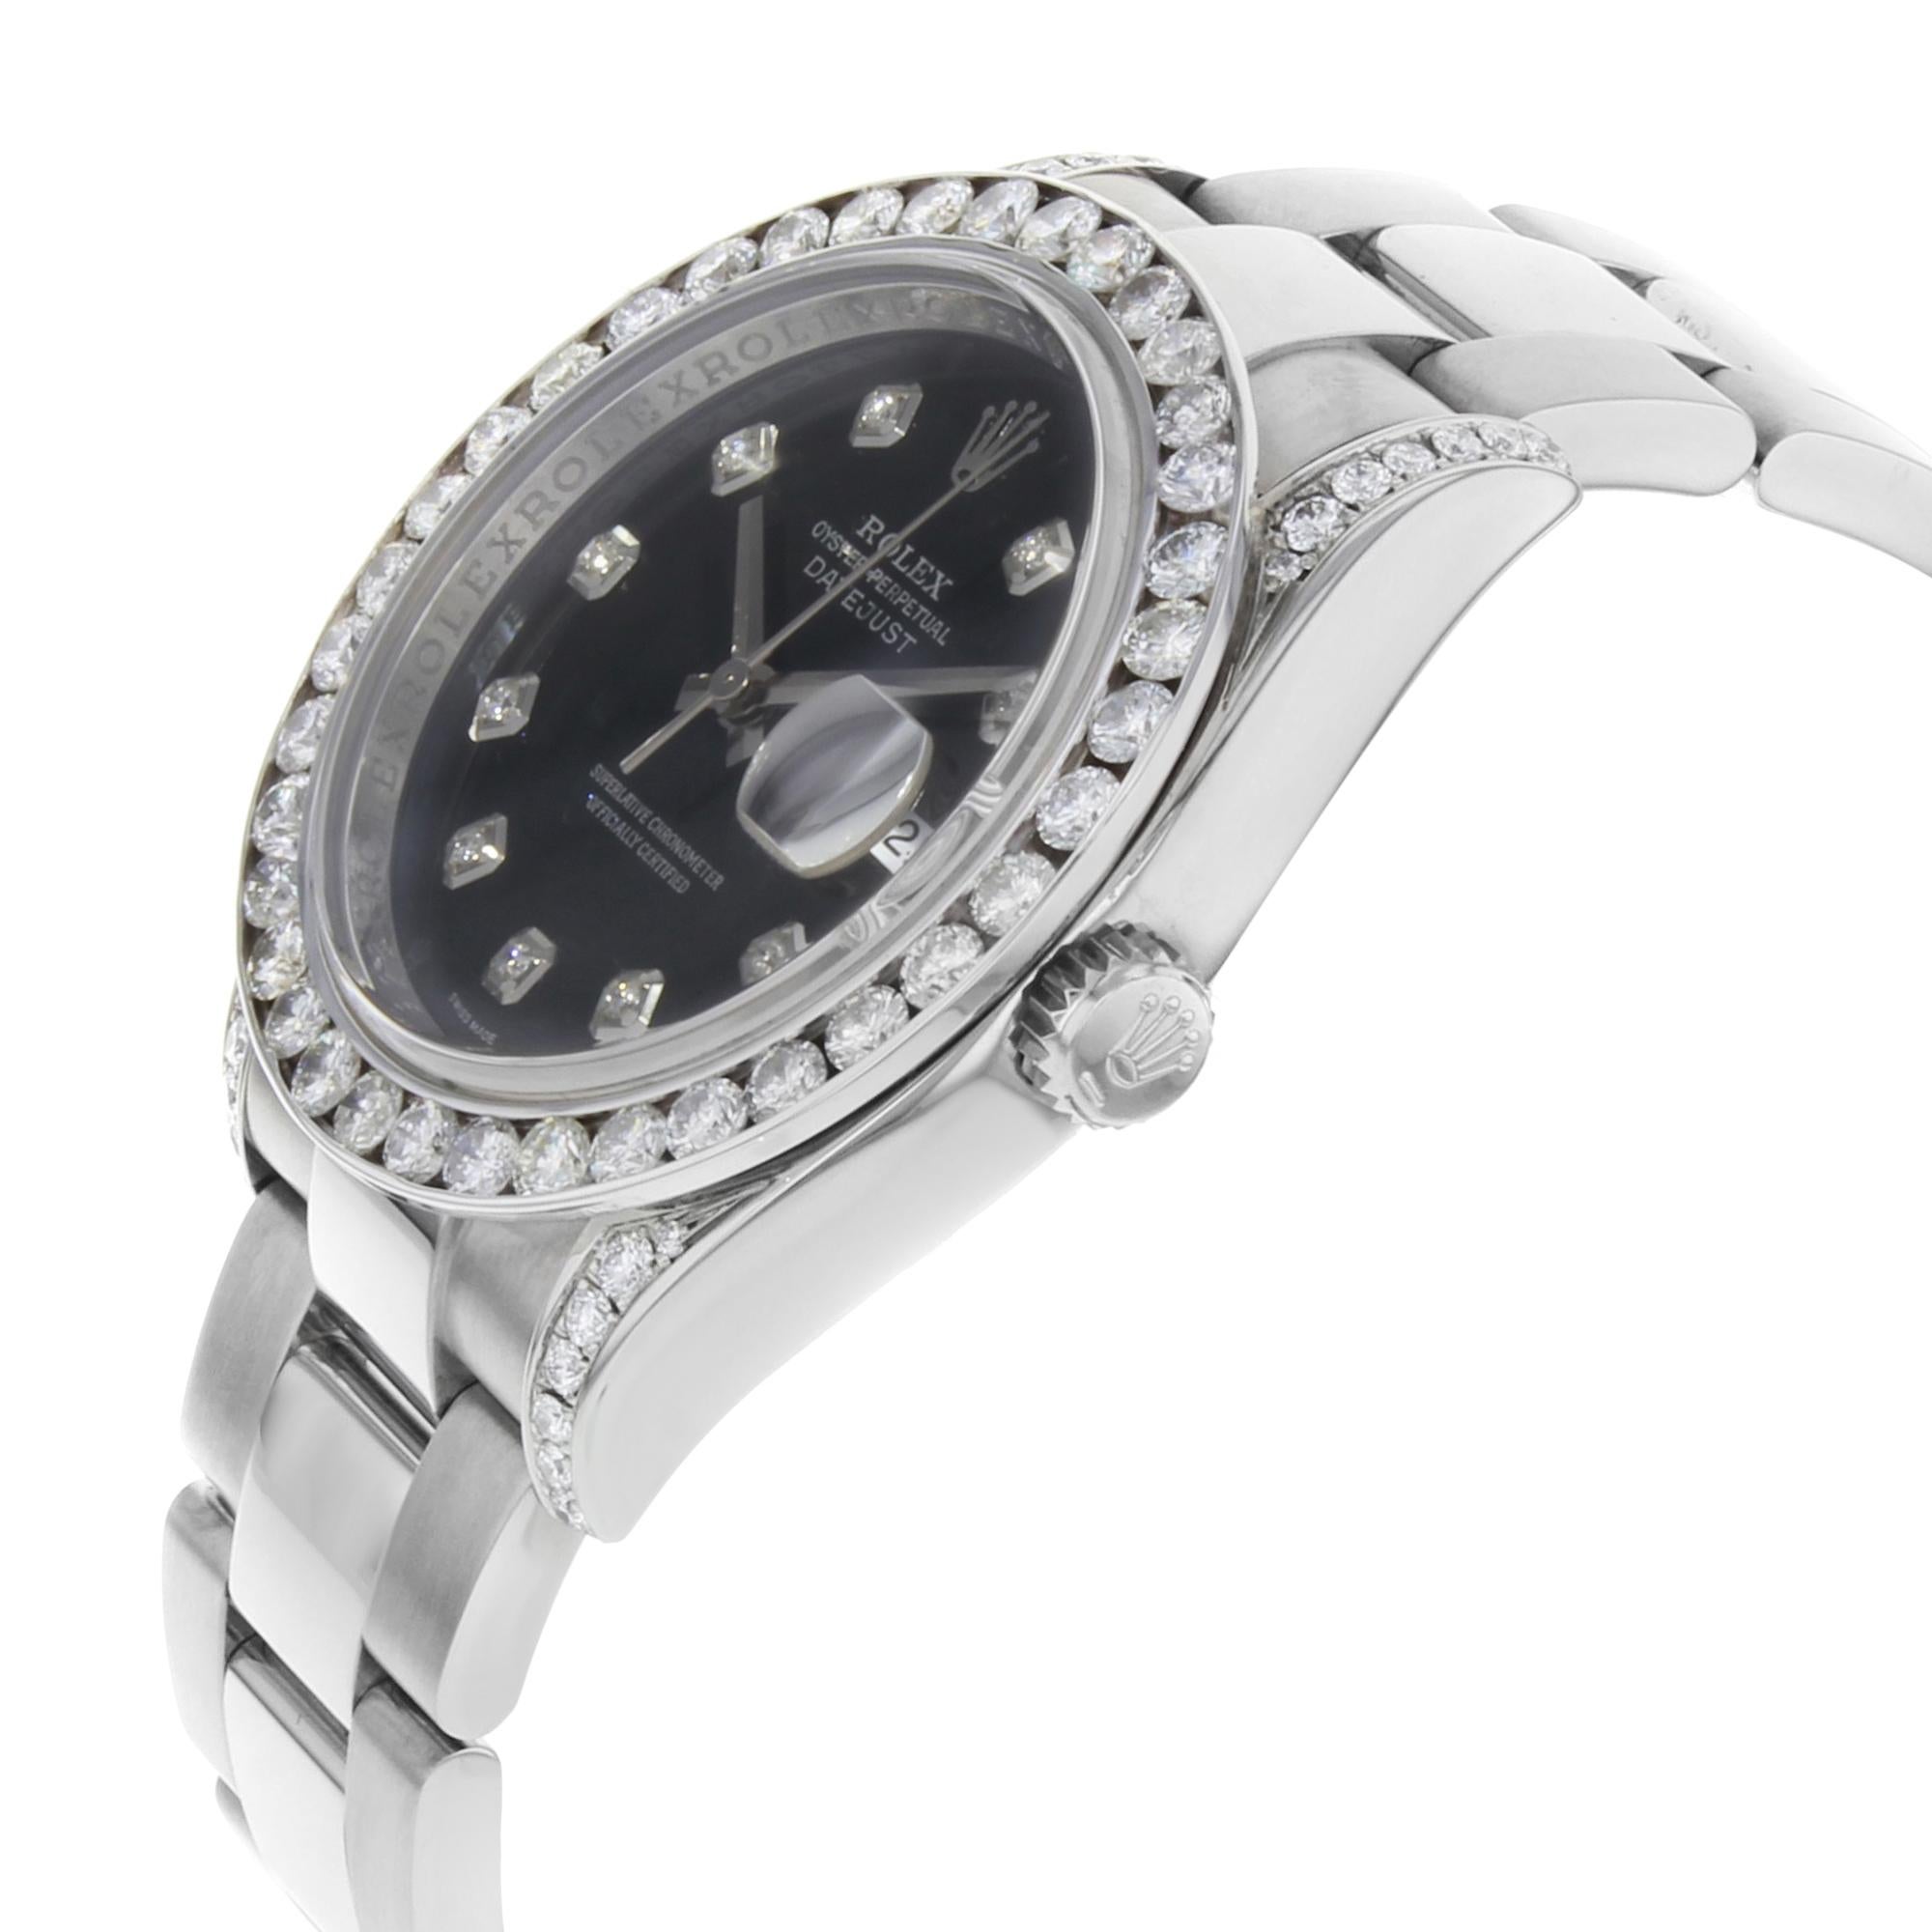 Modern Rolex Stainless Steel Diamond Datejust Automatic Wristwatch Ref 116234, 2008